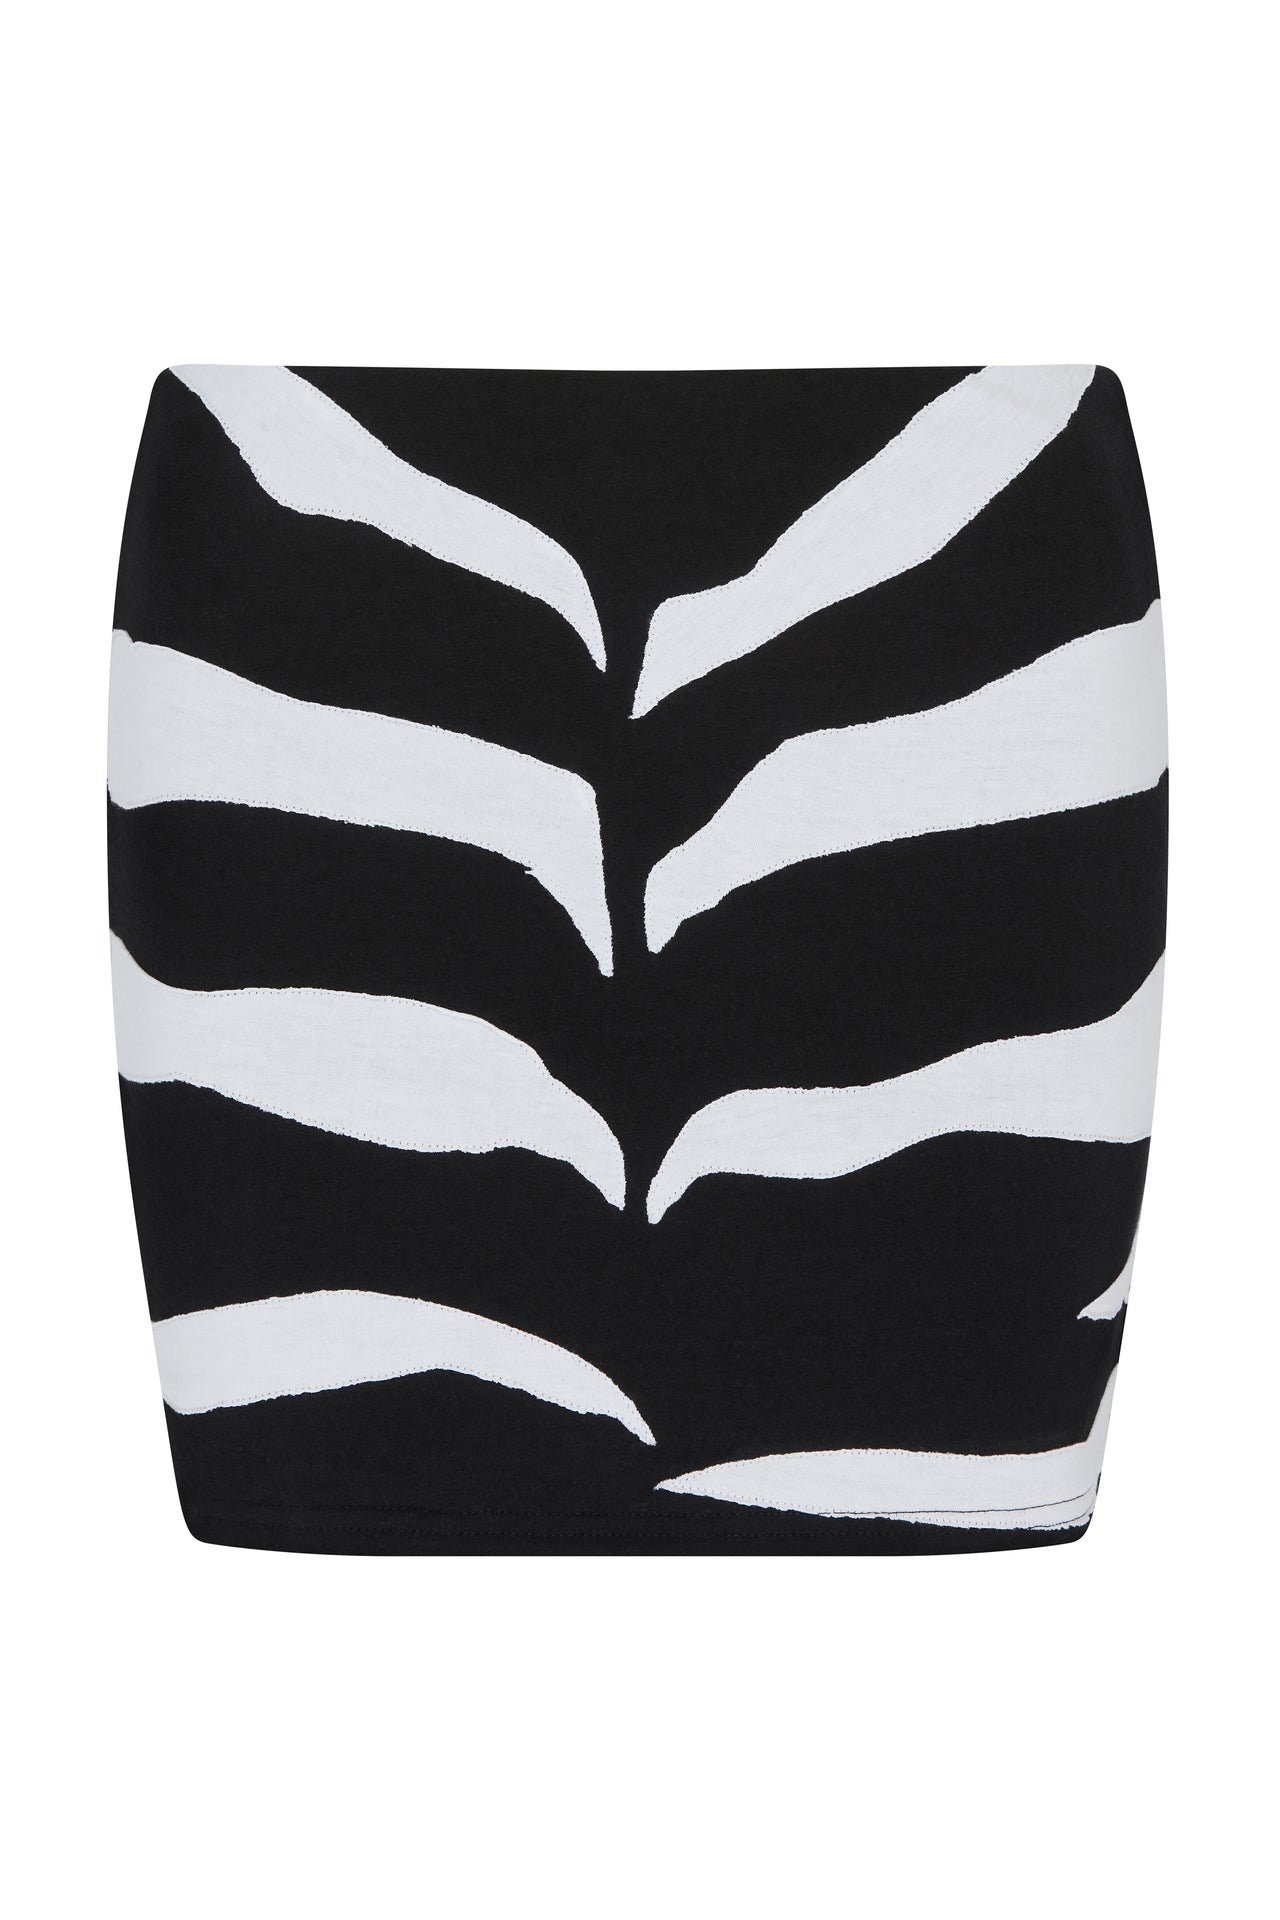 The Reconstituted Jersey Zebra Applique Mini-Skirt